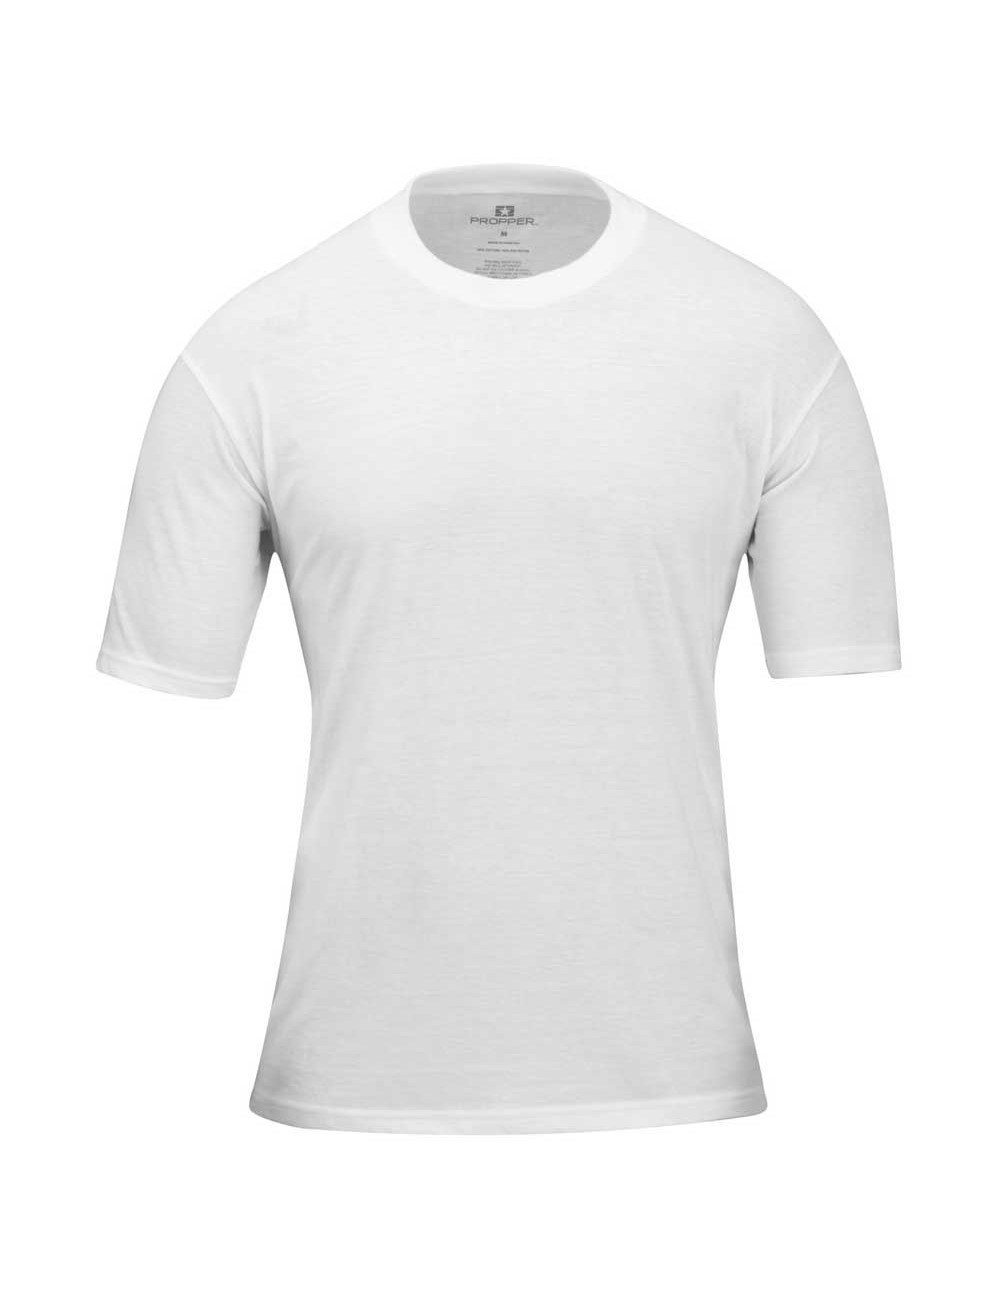 PROPPER T-Shirt Crew Neck White XL